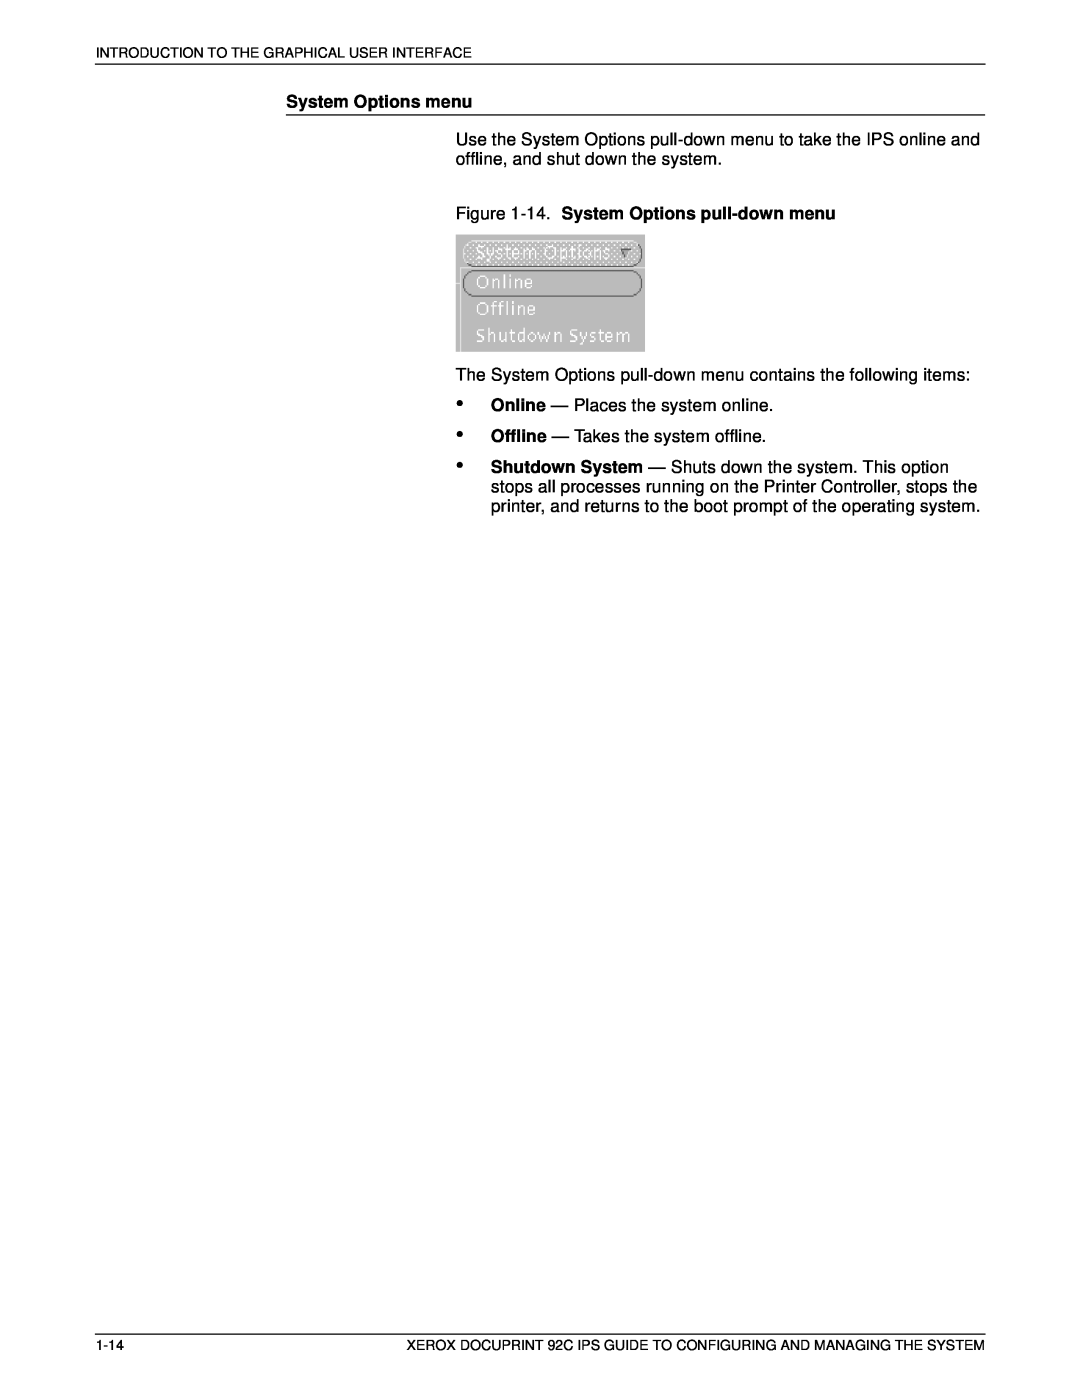 Xerox 92C IPS manual System Options menu, 14. System Options pull-down menu 